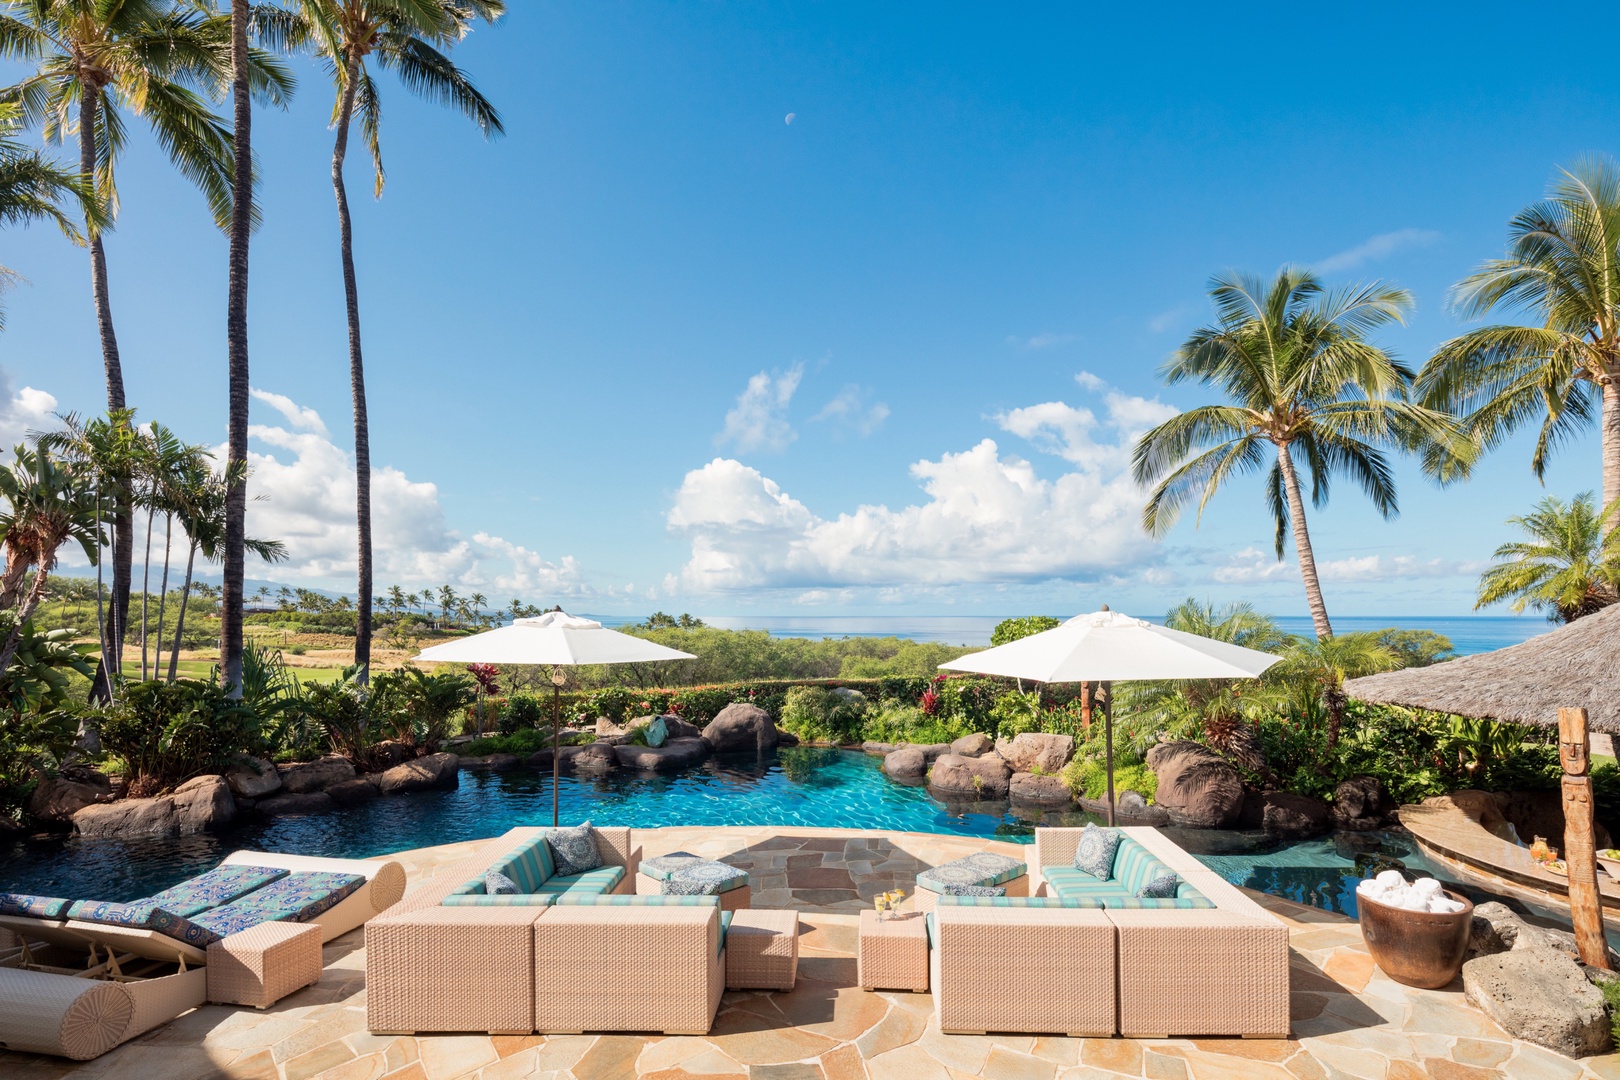 Kamuela Vacation Rentals, 5BD Fairways North (1) Estate Home at Mauna Kea Resort - View of lanai, pool deck, pool, and ocean from great room.